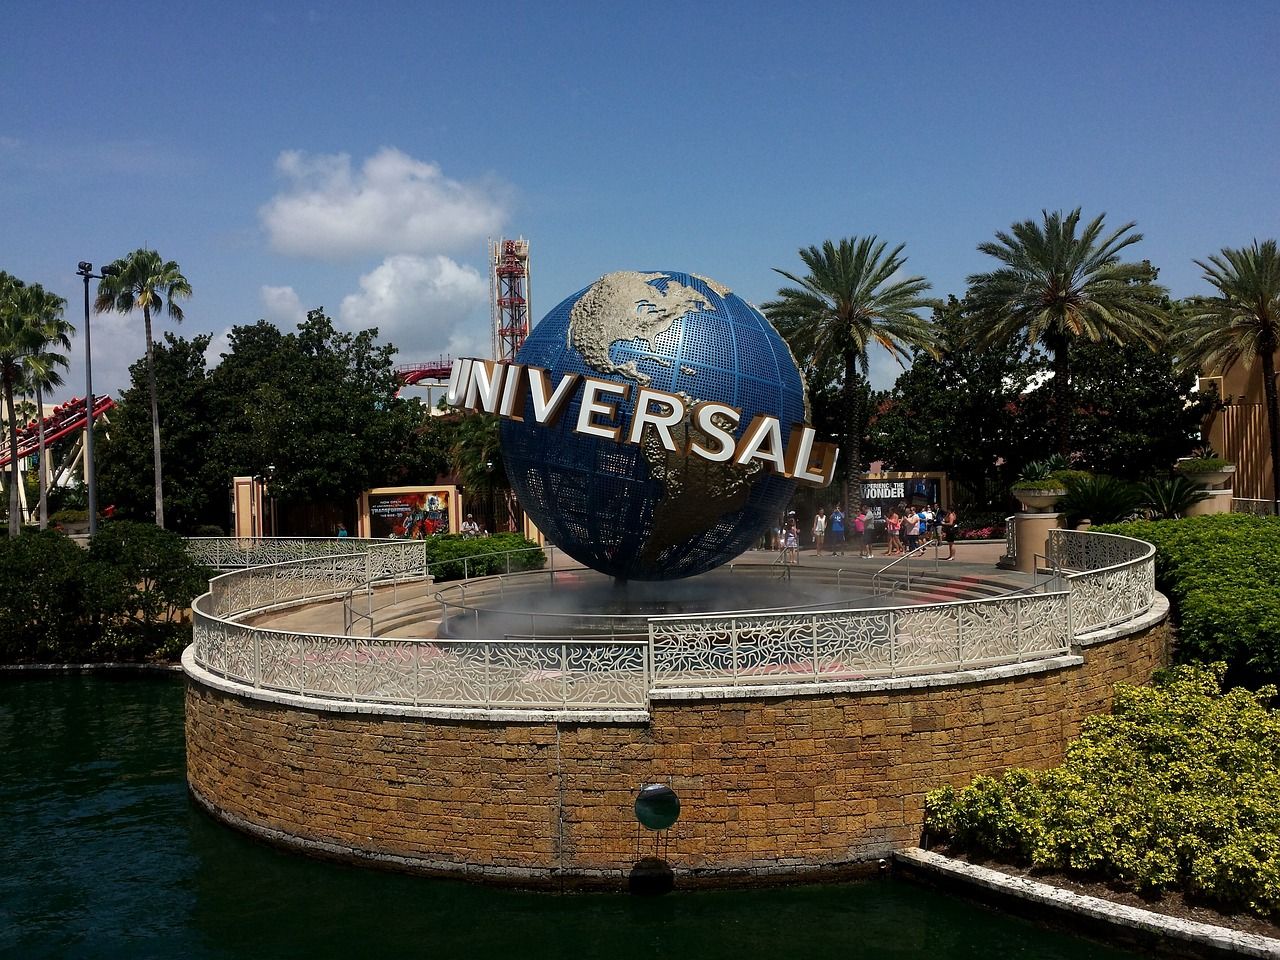 Minion Land opening at Universal Studios Orlando